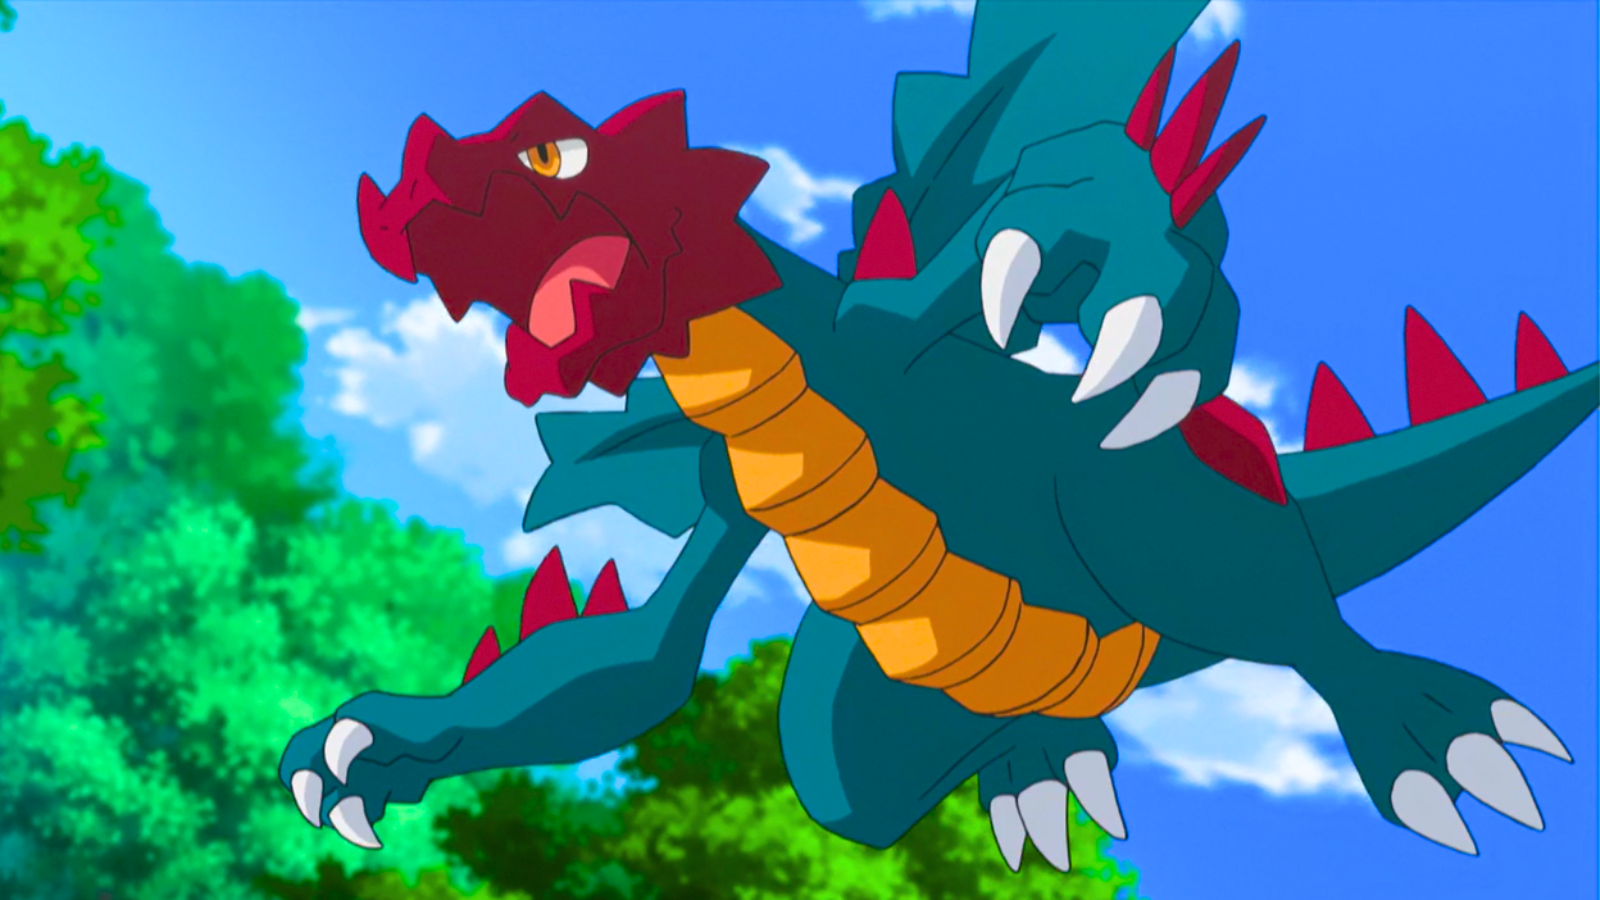 Getting LUCKY with Shiny Raikou! Catching RARE Shiny Raikou in Pokémon